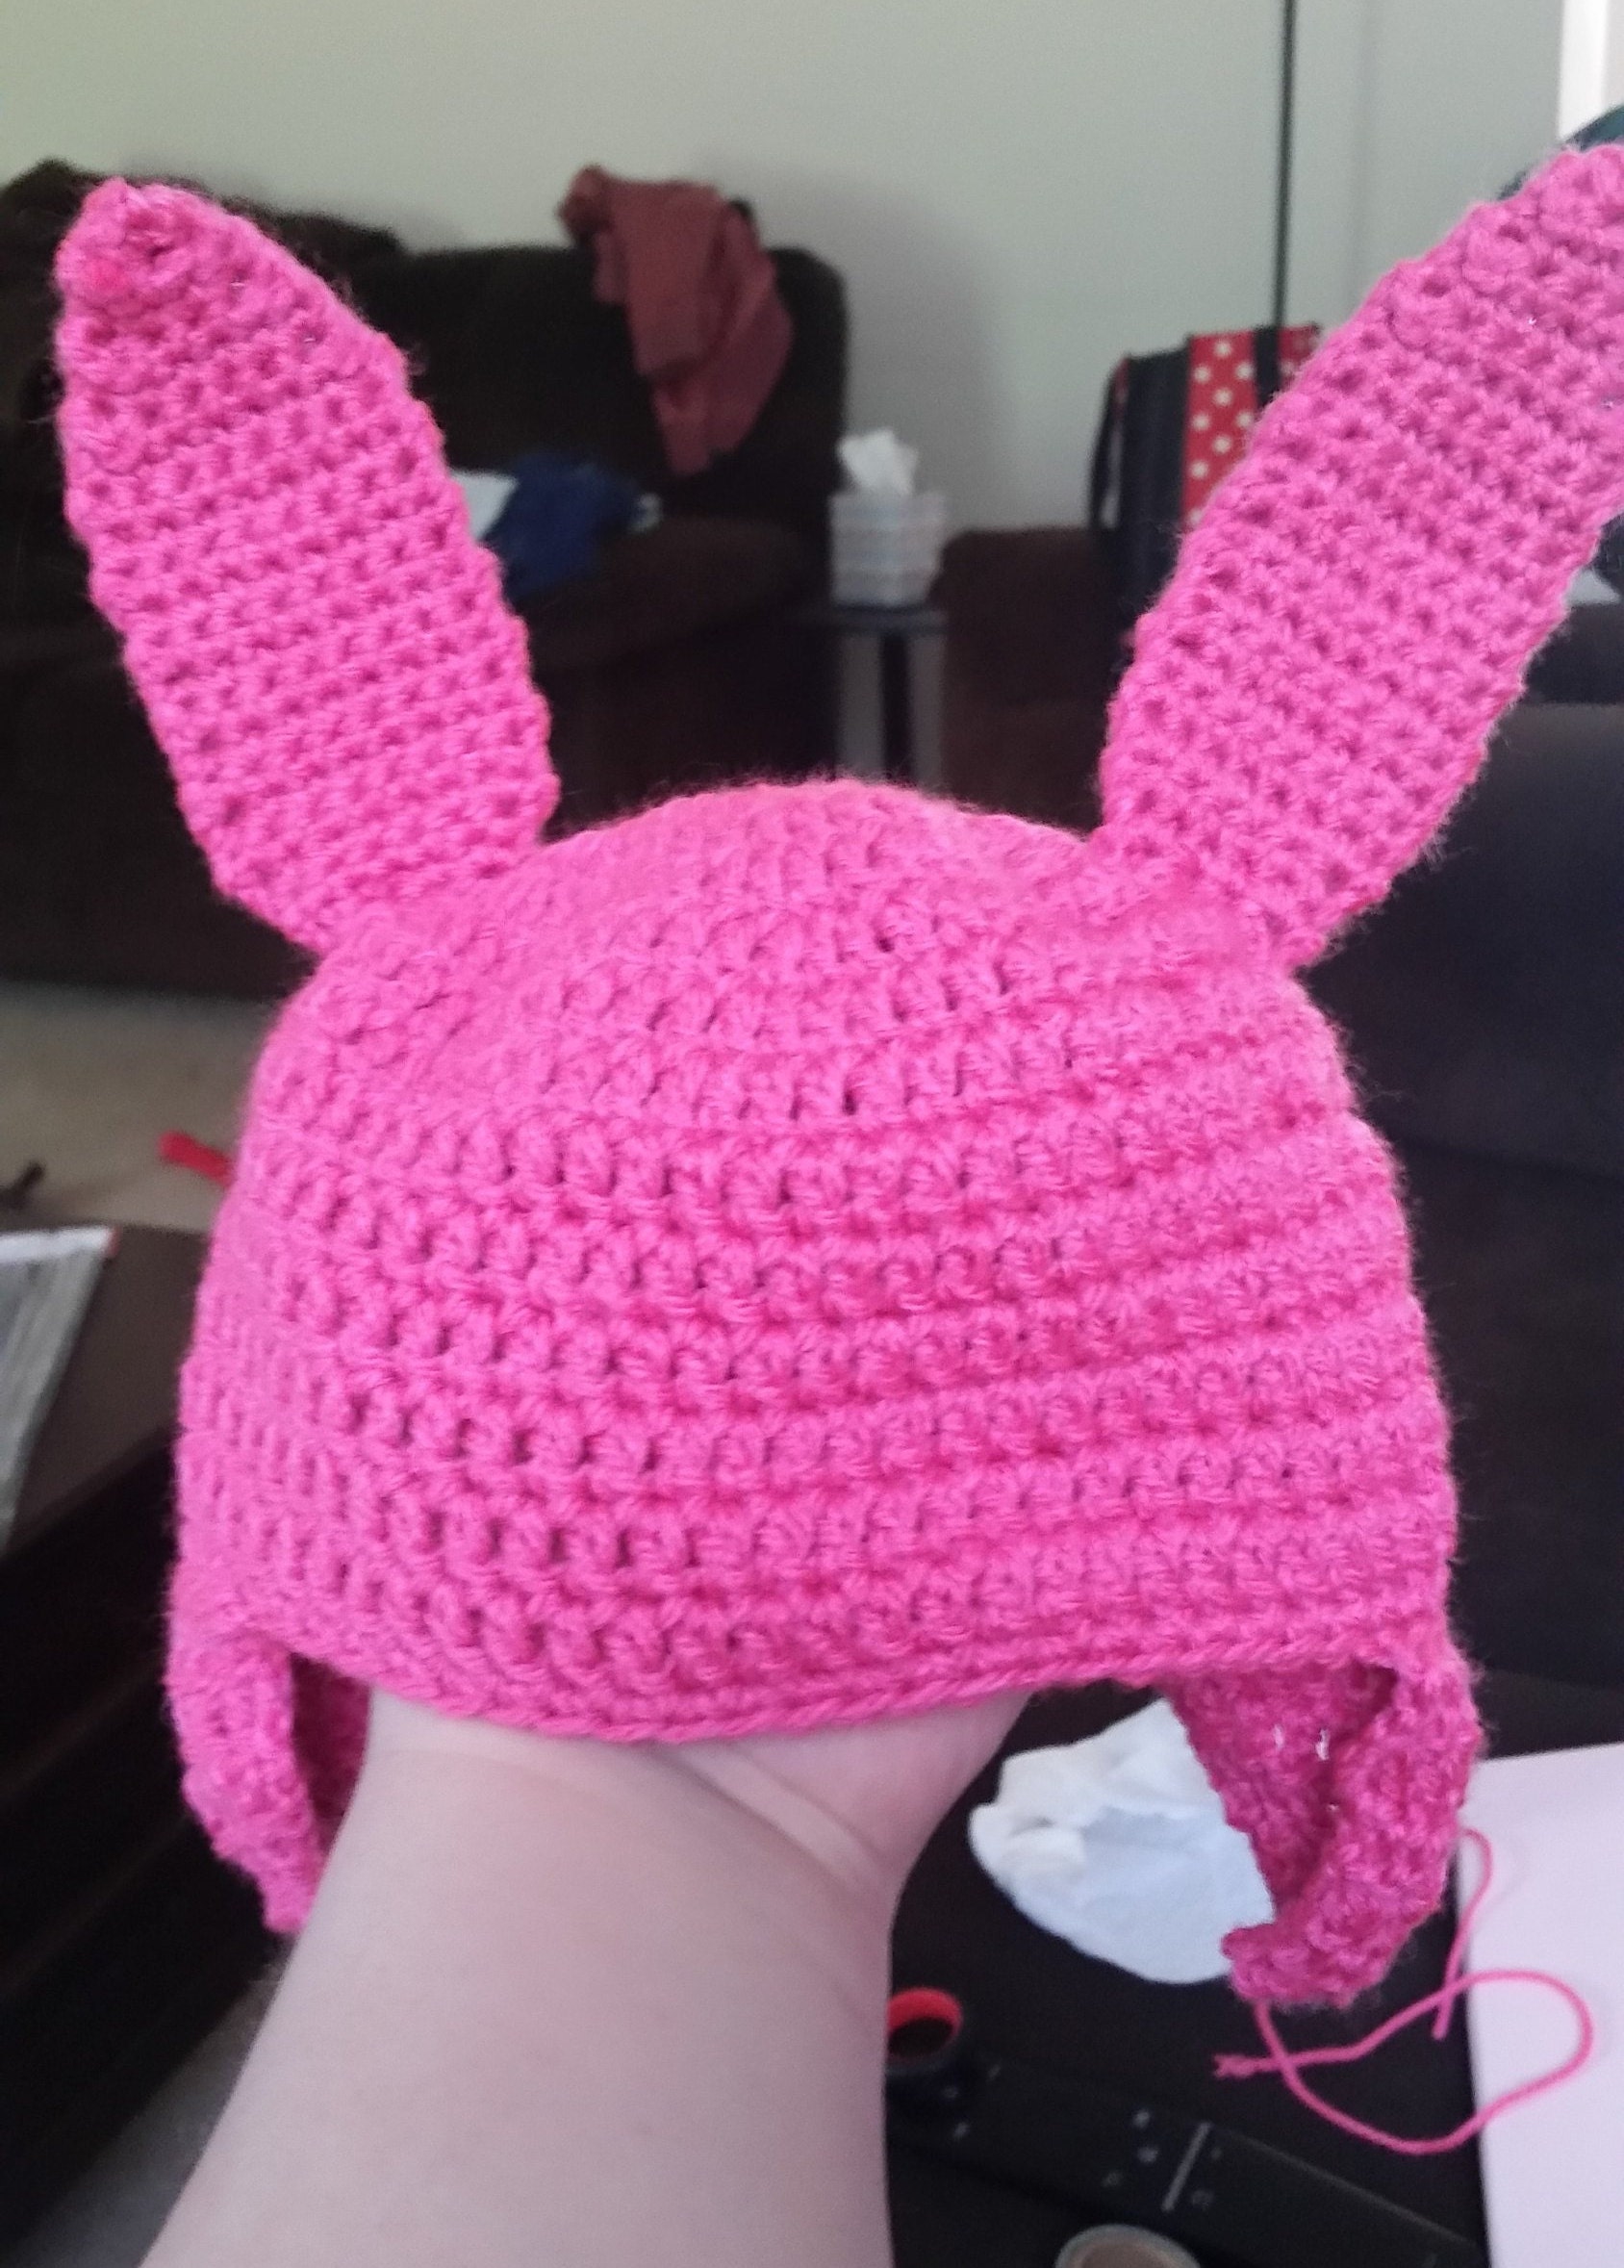 New Pink Rabbit Ear Beanies Women Louise Belcher Whimsical Handmade Knitted  Hats Fashion Party Mask Balaclava Warm Winter Hat